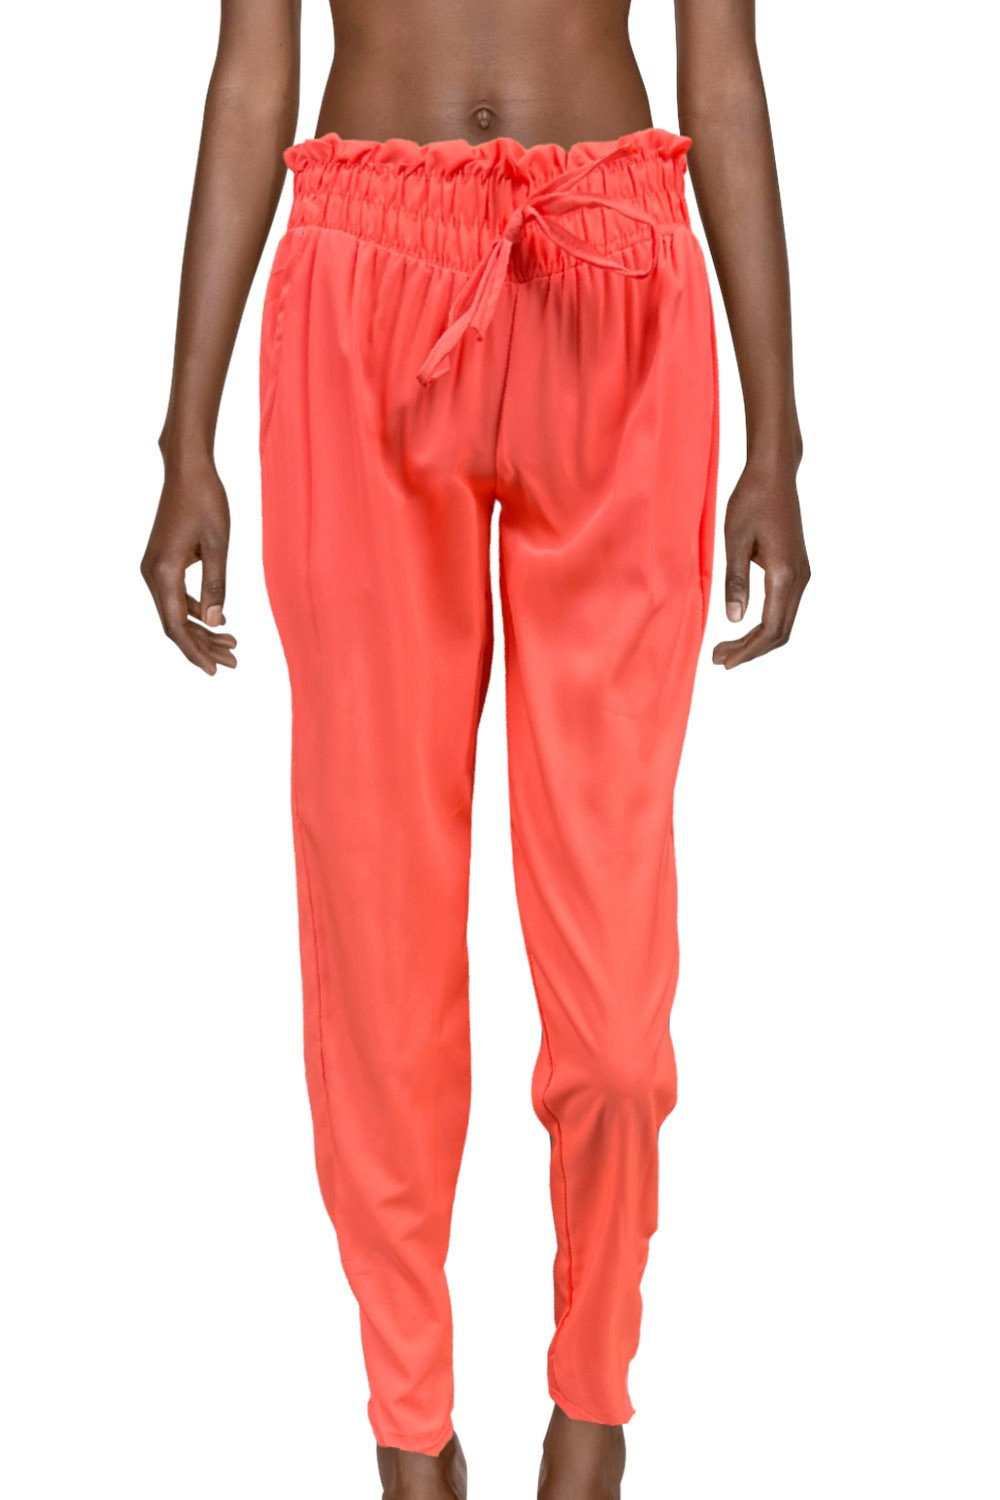 Pantalón fluido naranja flúor - e-shop moda mujer